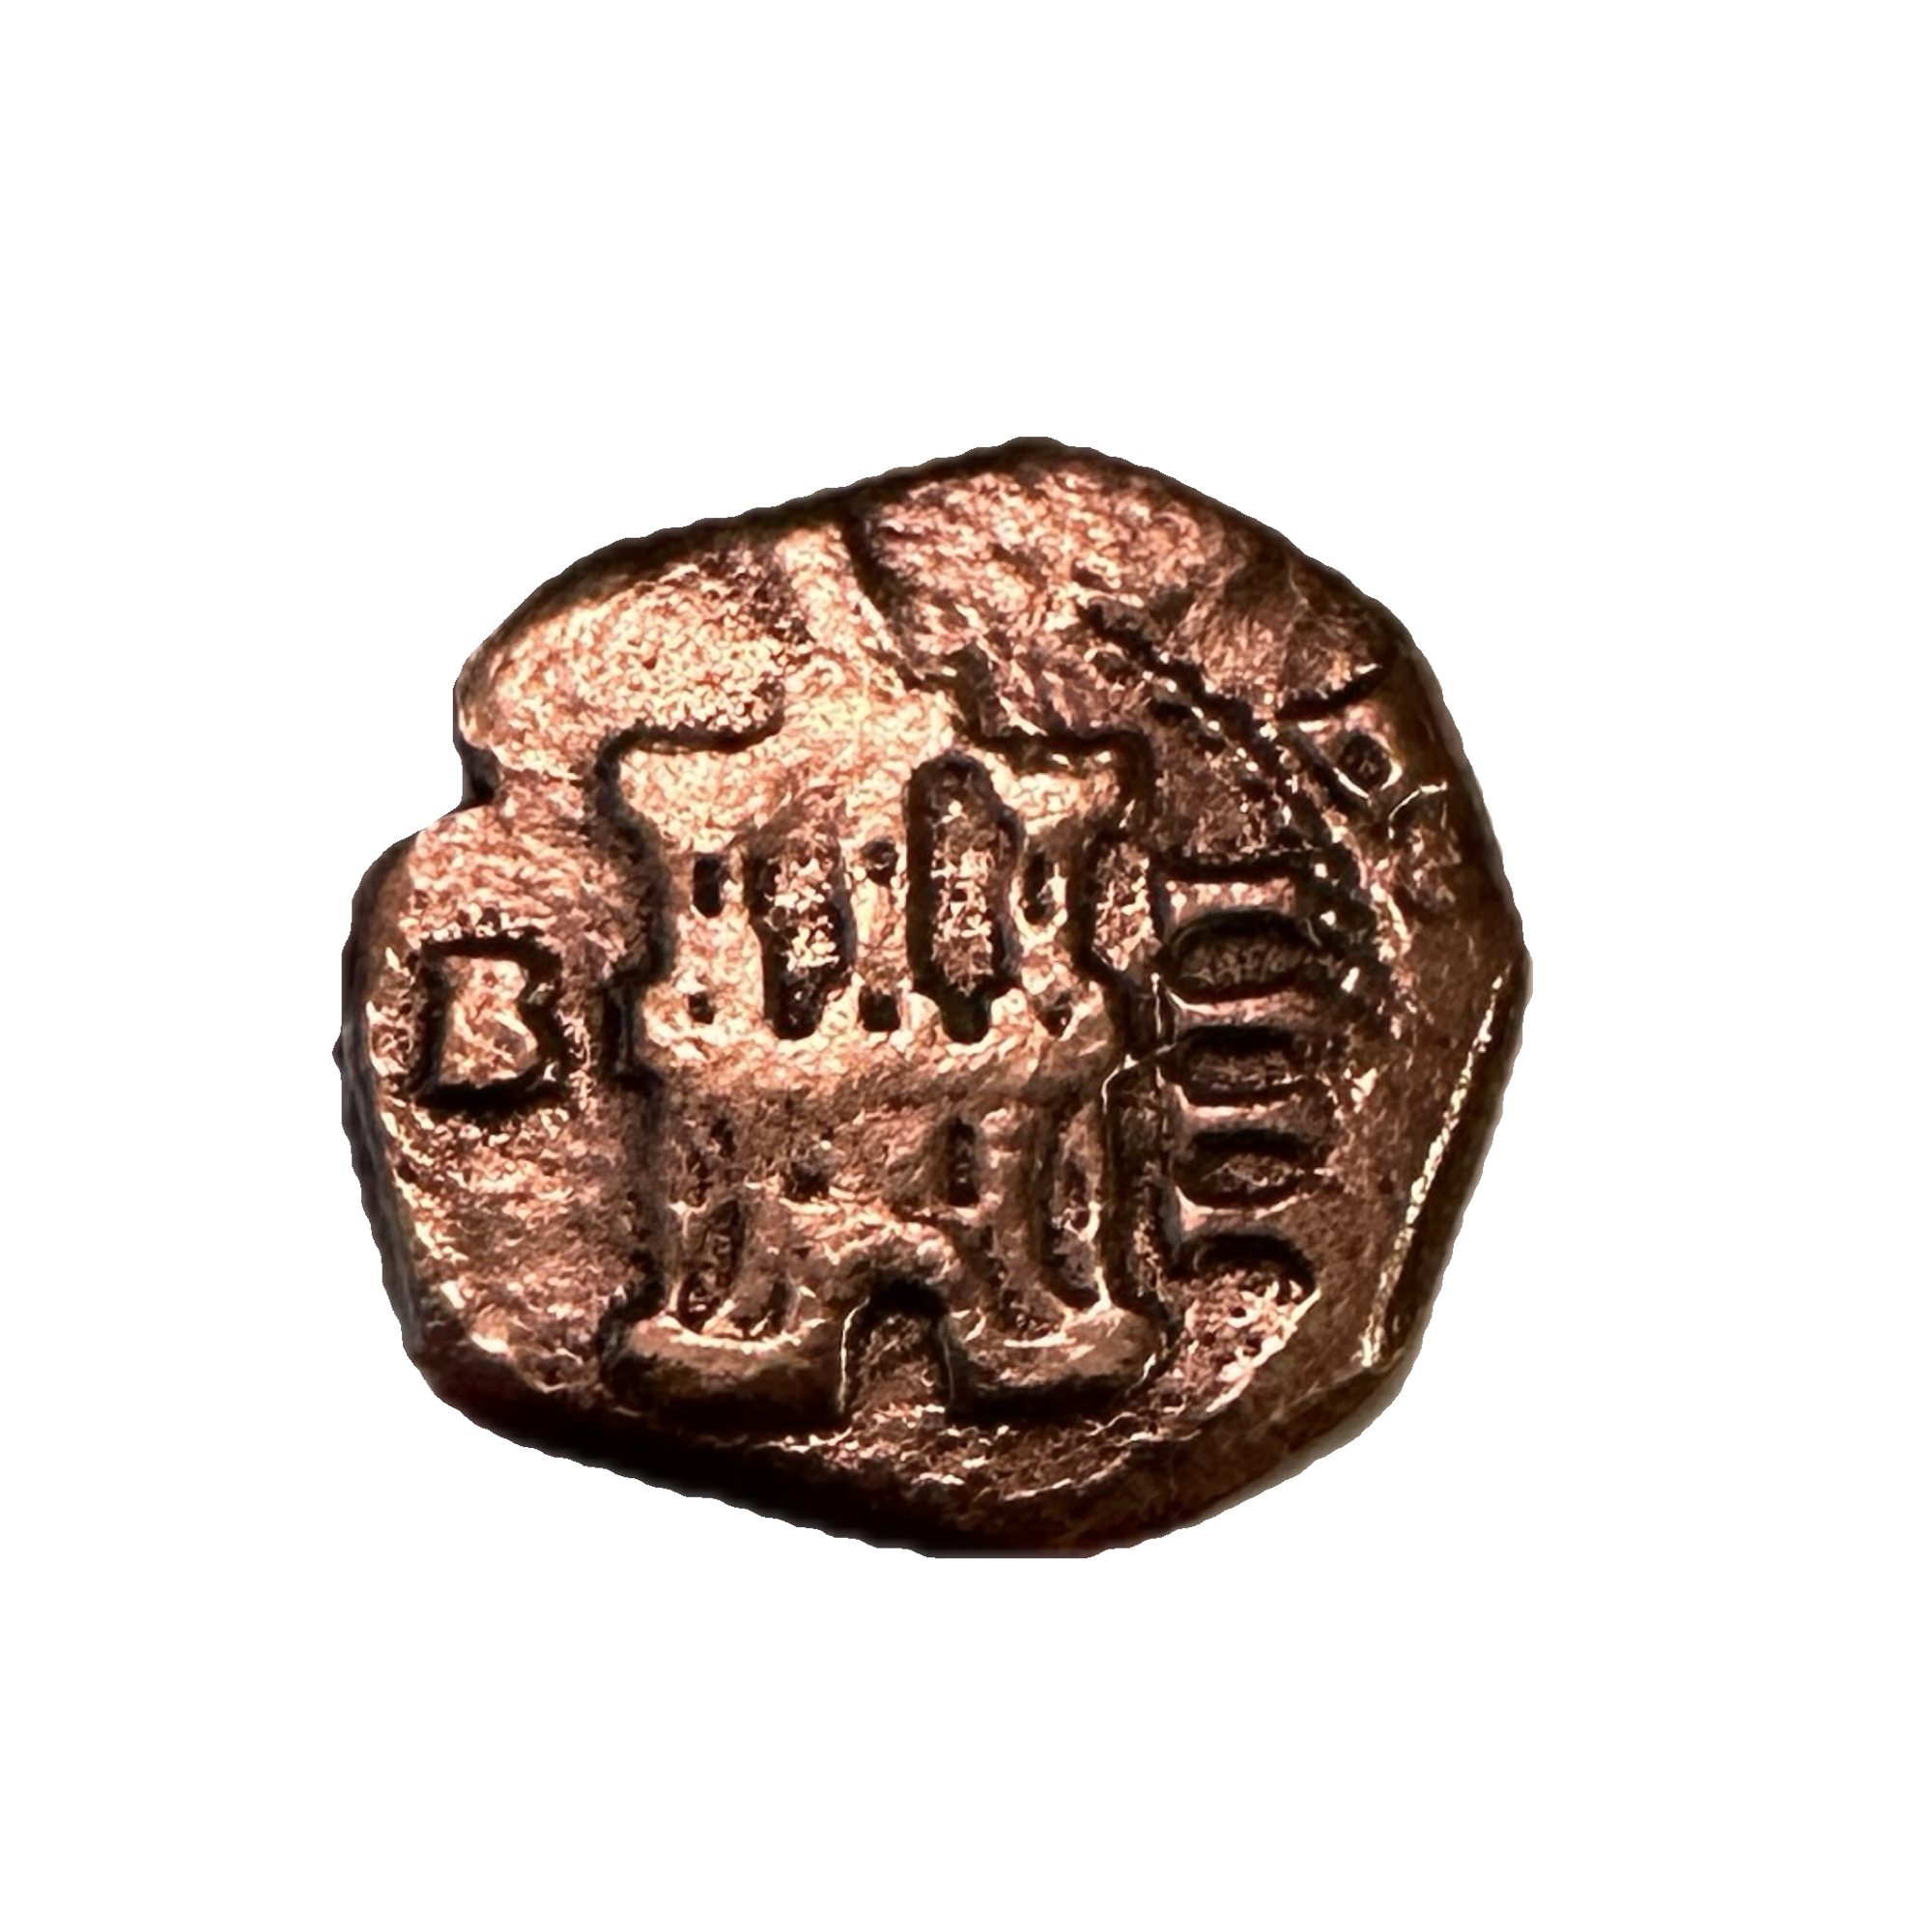 Detailed castle on copper cob pirate coin. 1600s era